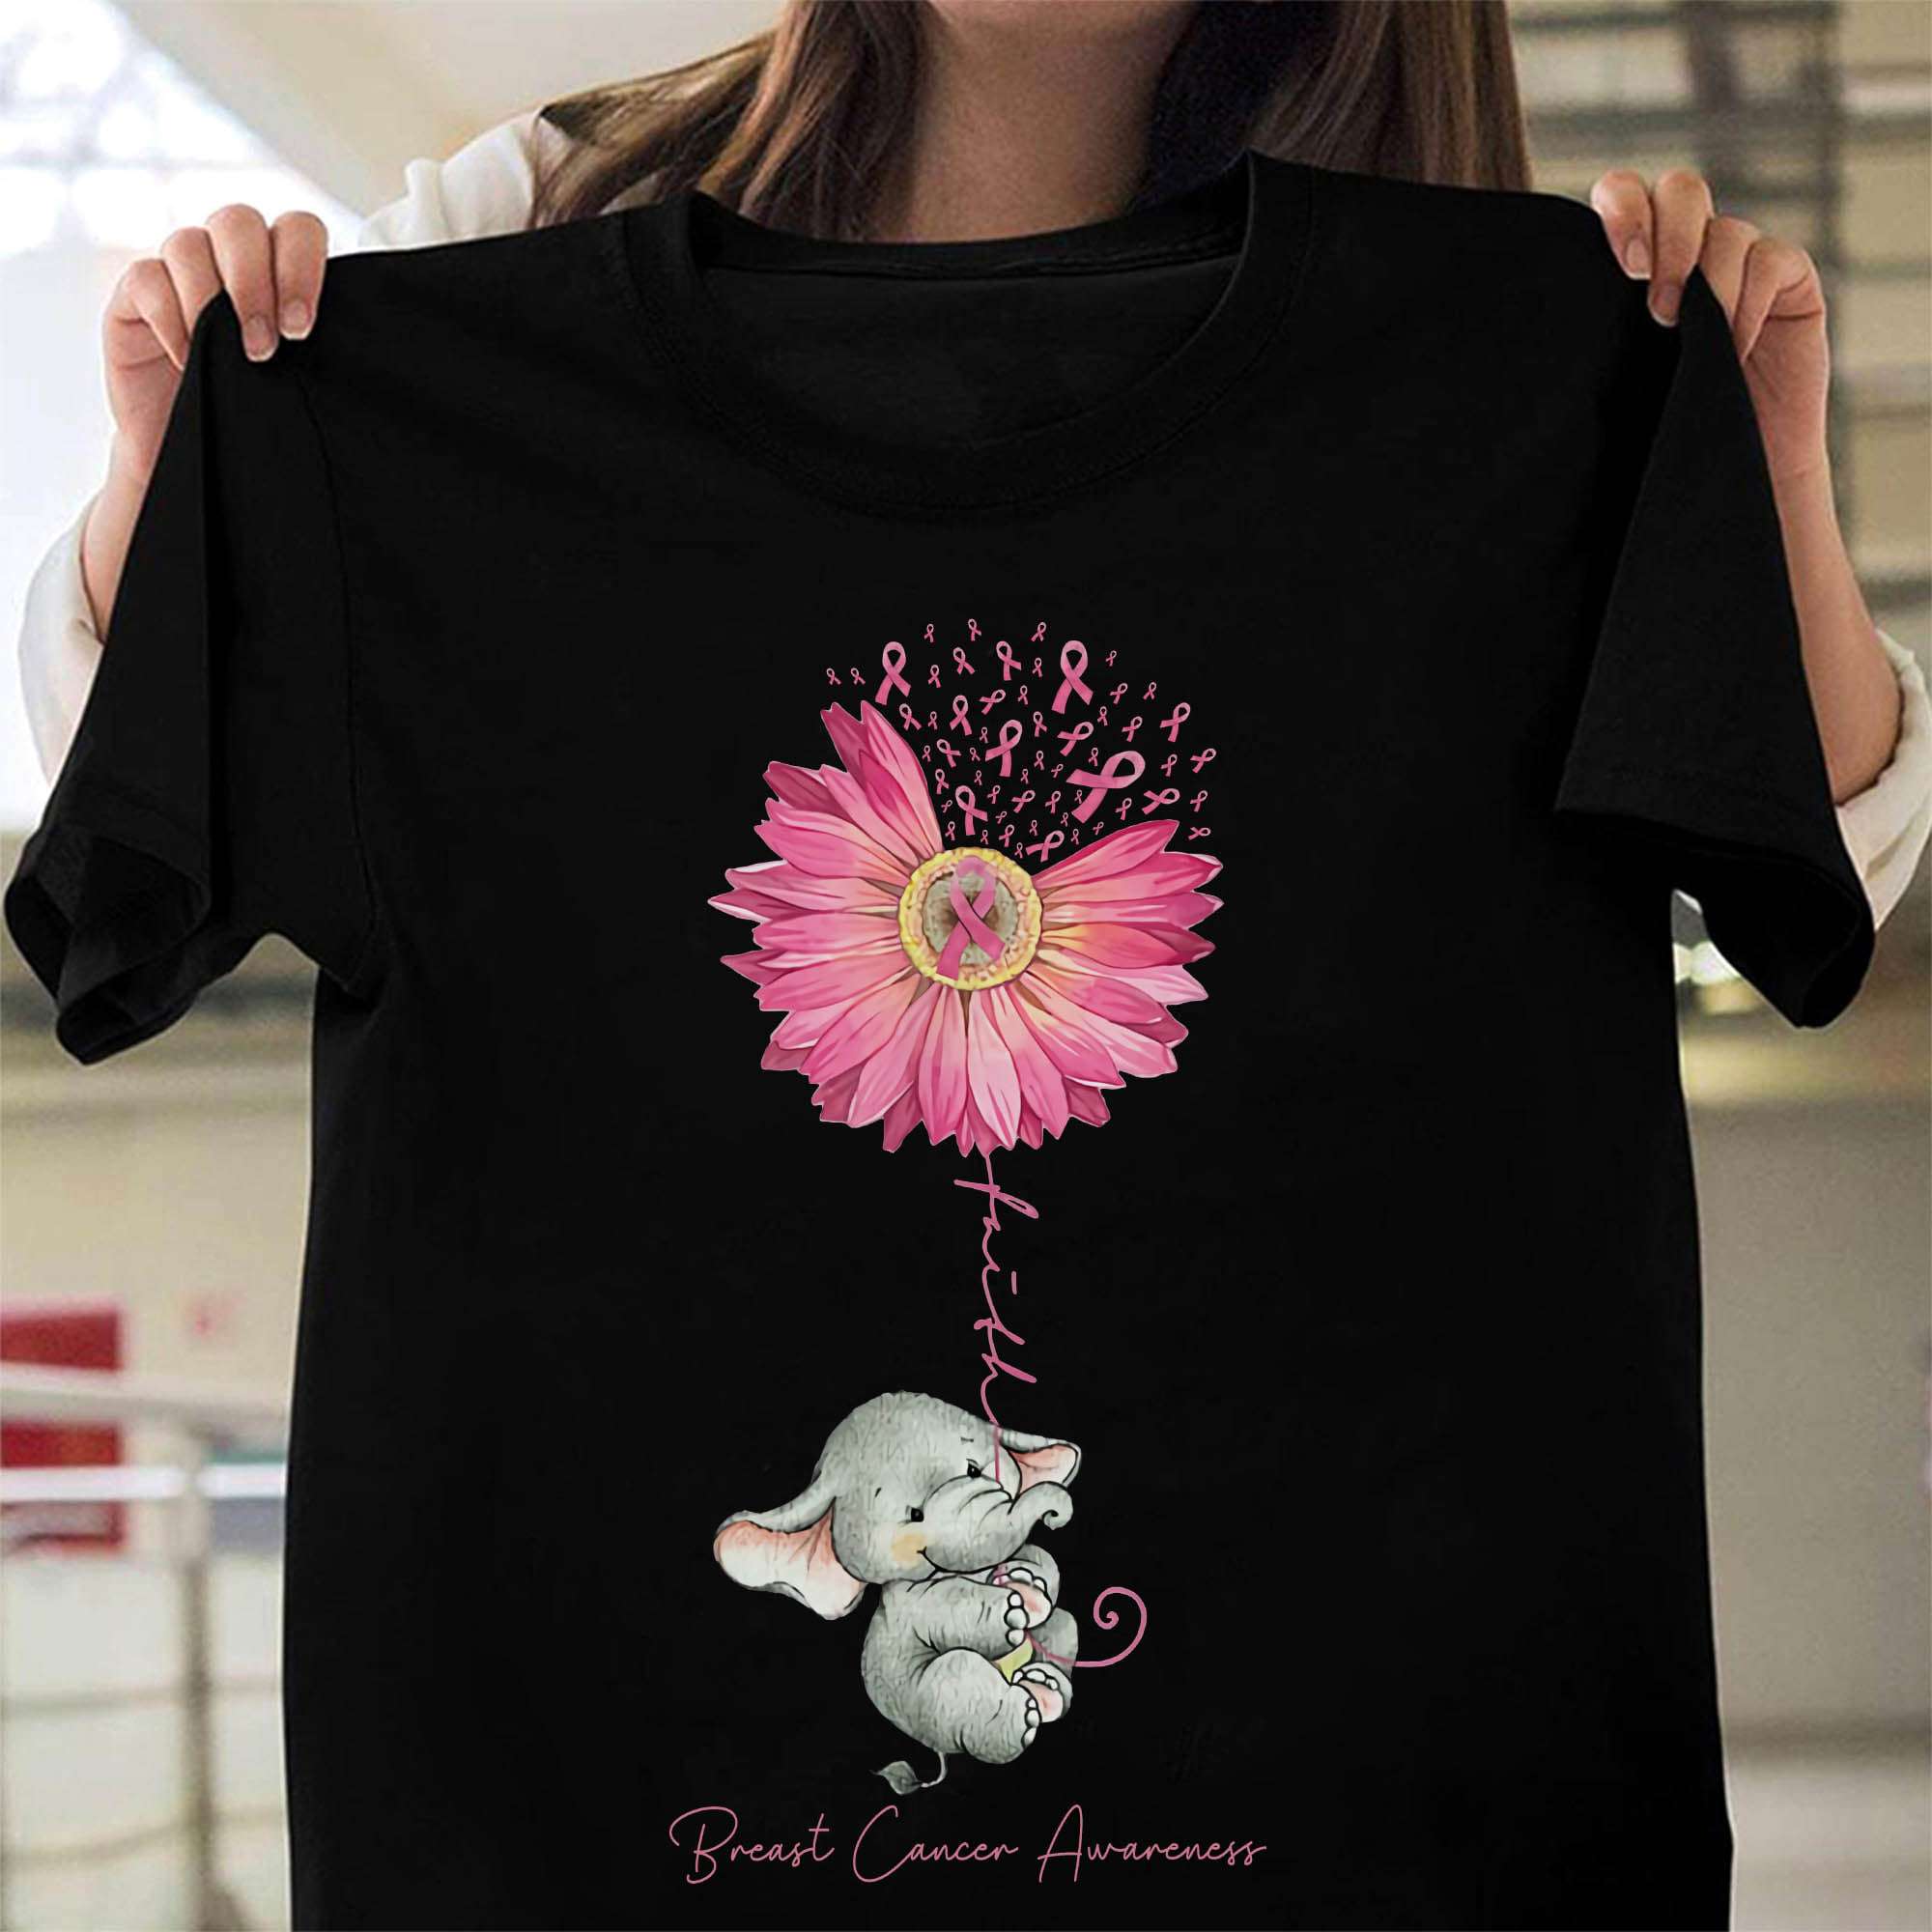 Breast cancer awareness - Sunflower elephant, sunflower of hope